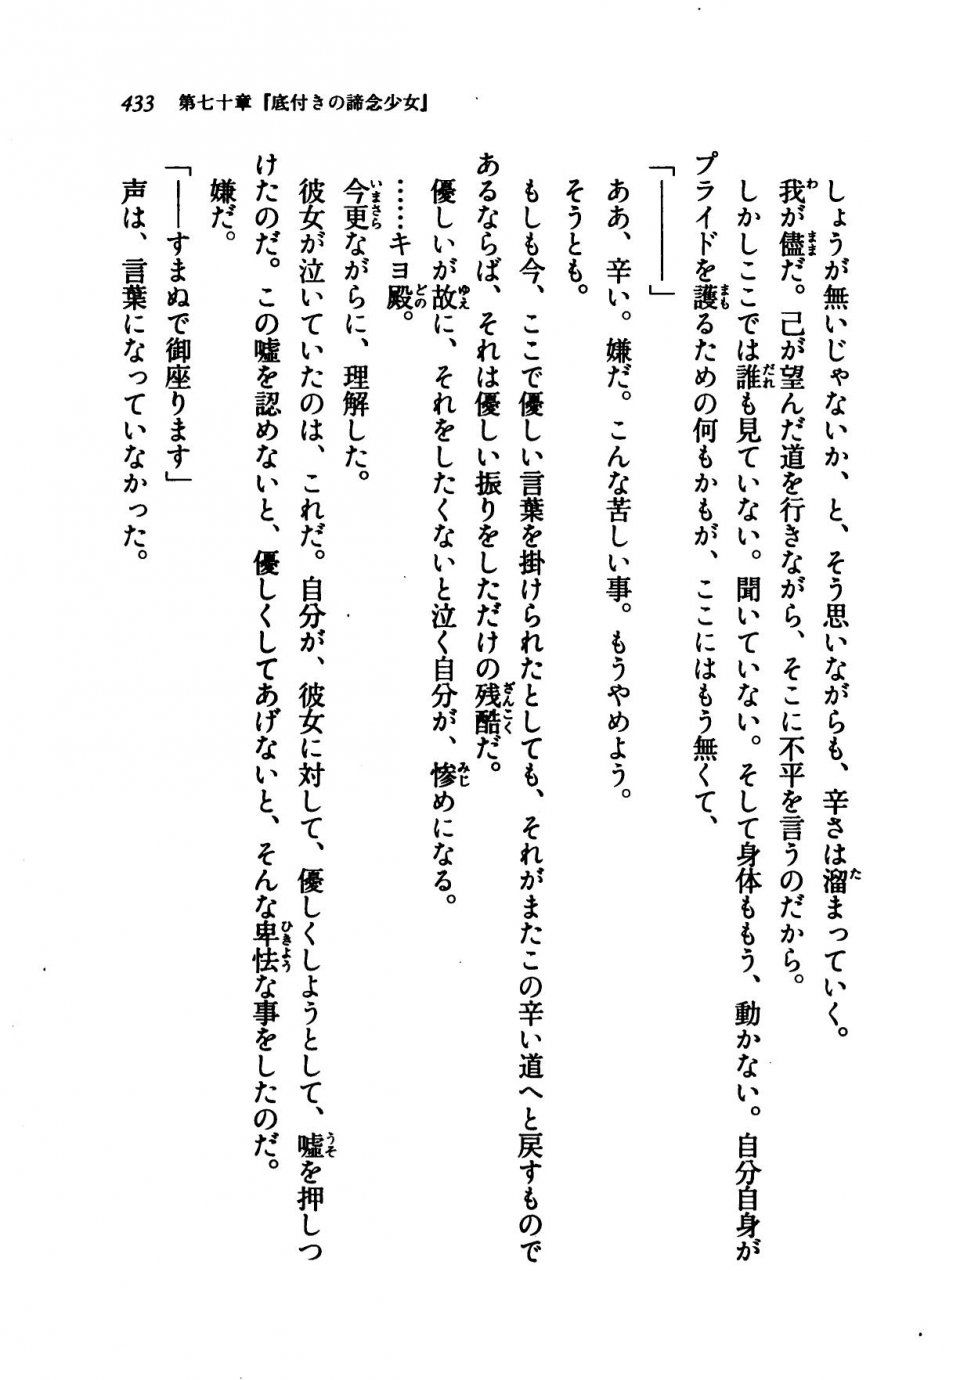 Kyoukai Senjou no Horizon LN Vol 21(8C) Part 1 - Photo #432